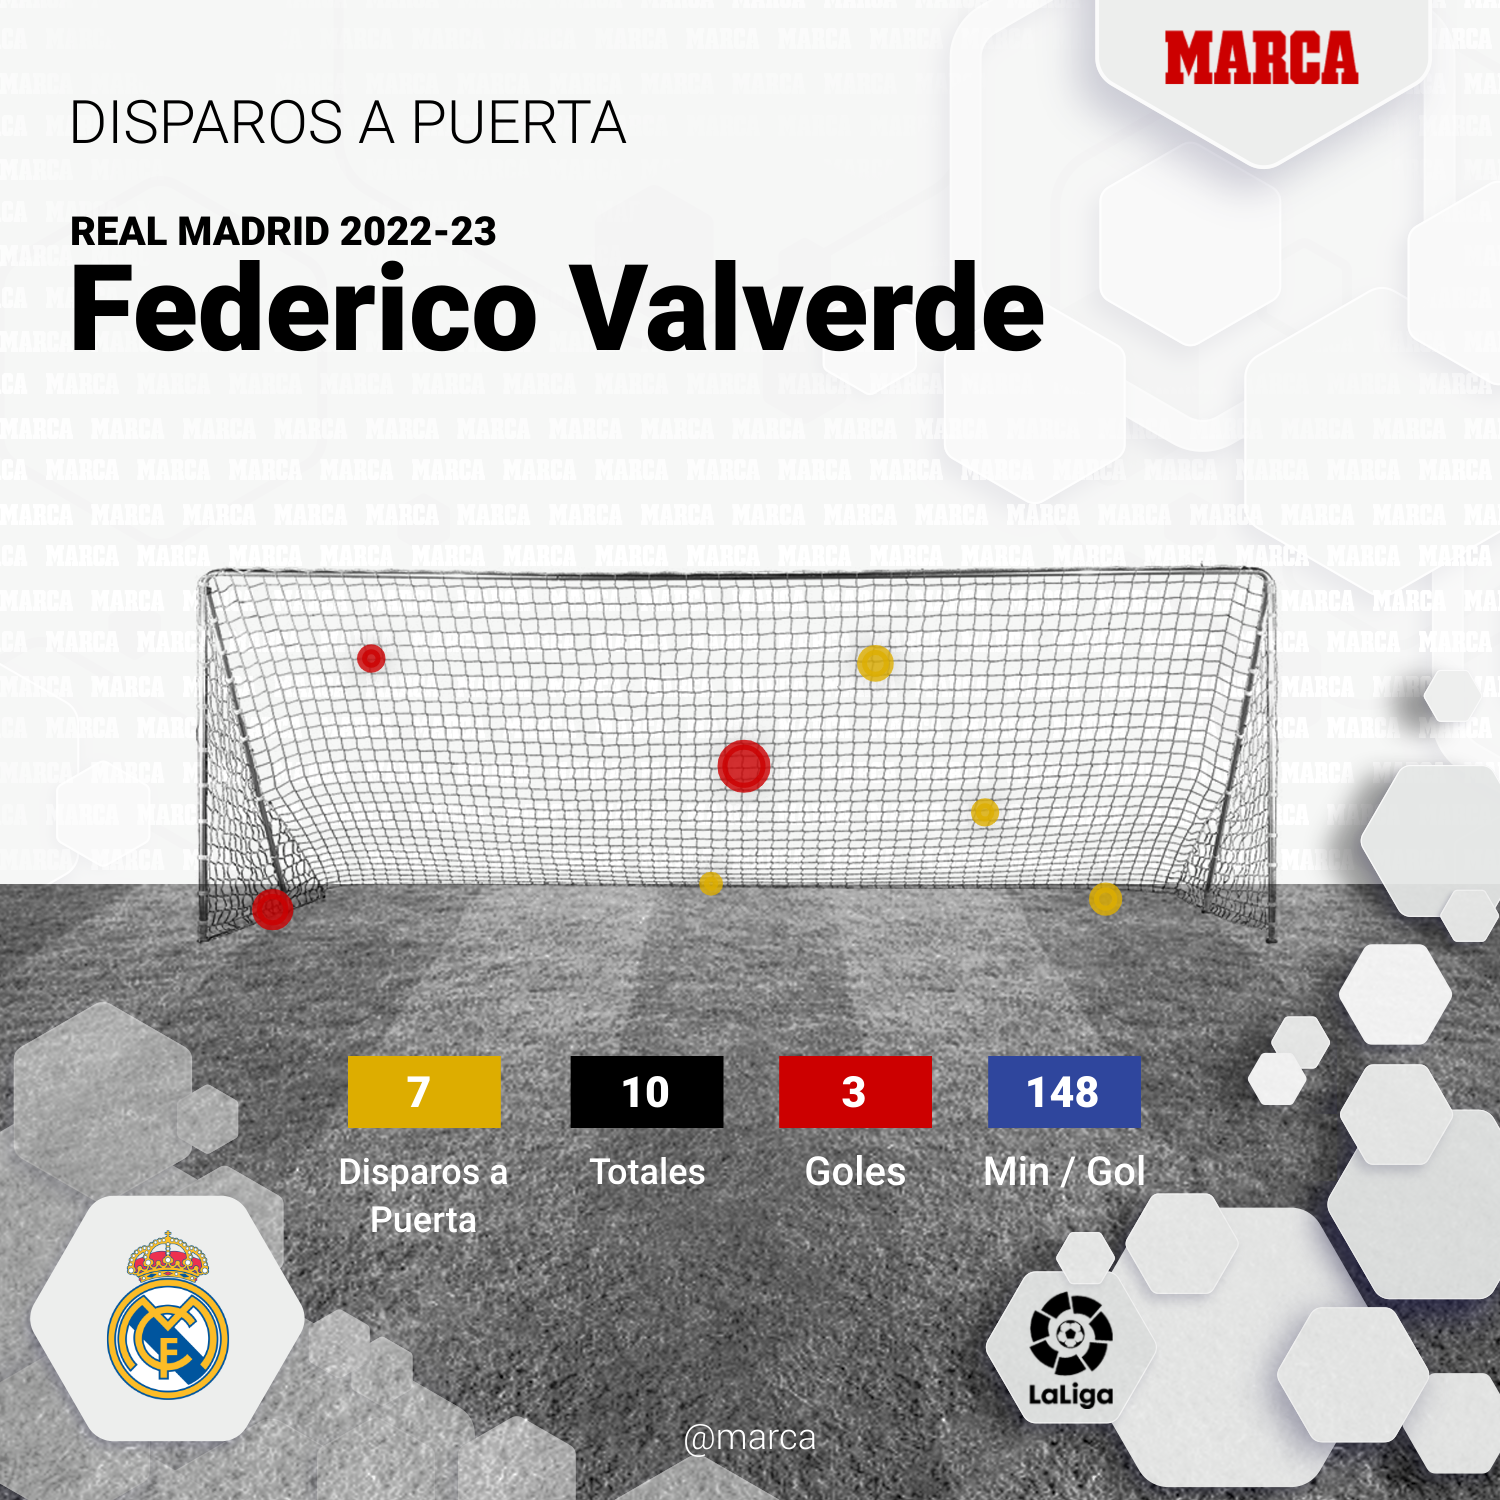 Disparos a puerta de Valverde 2022-23